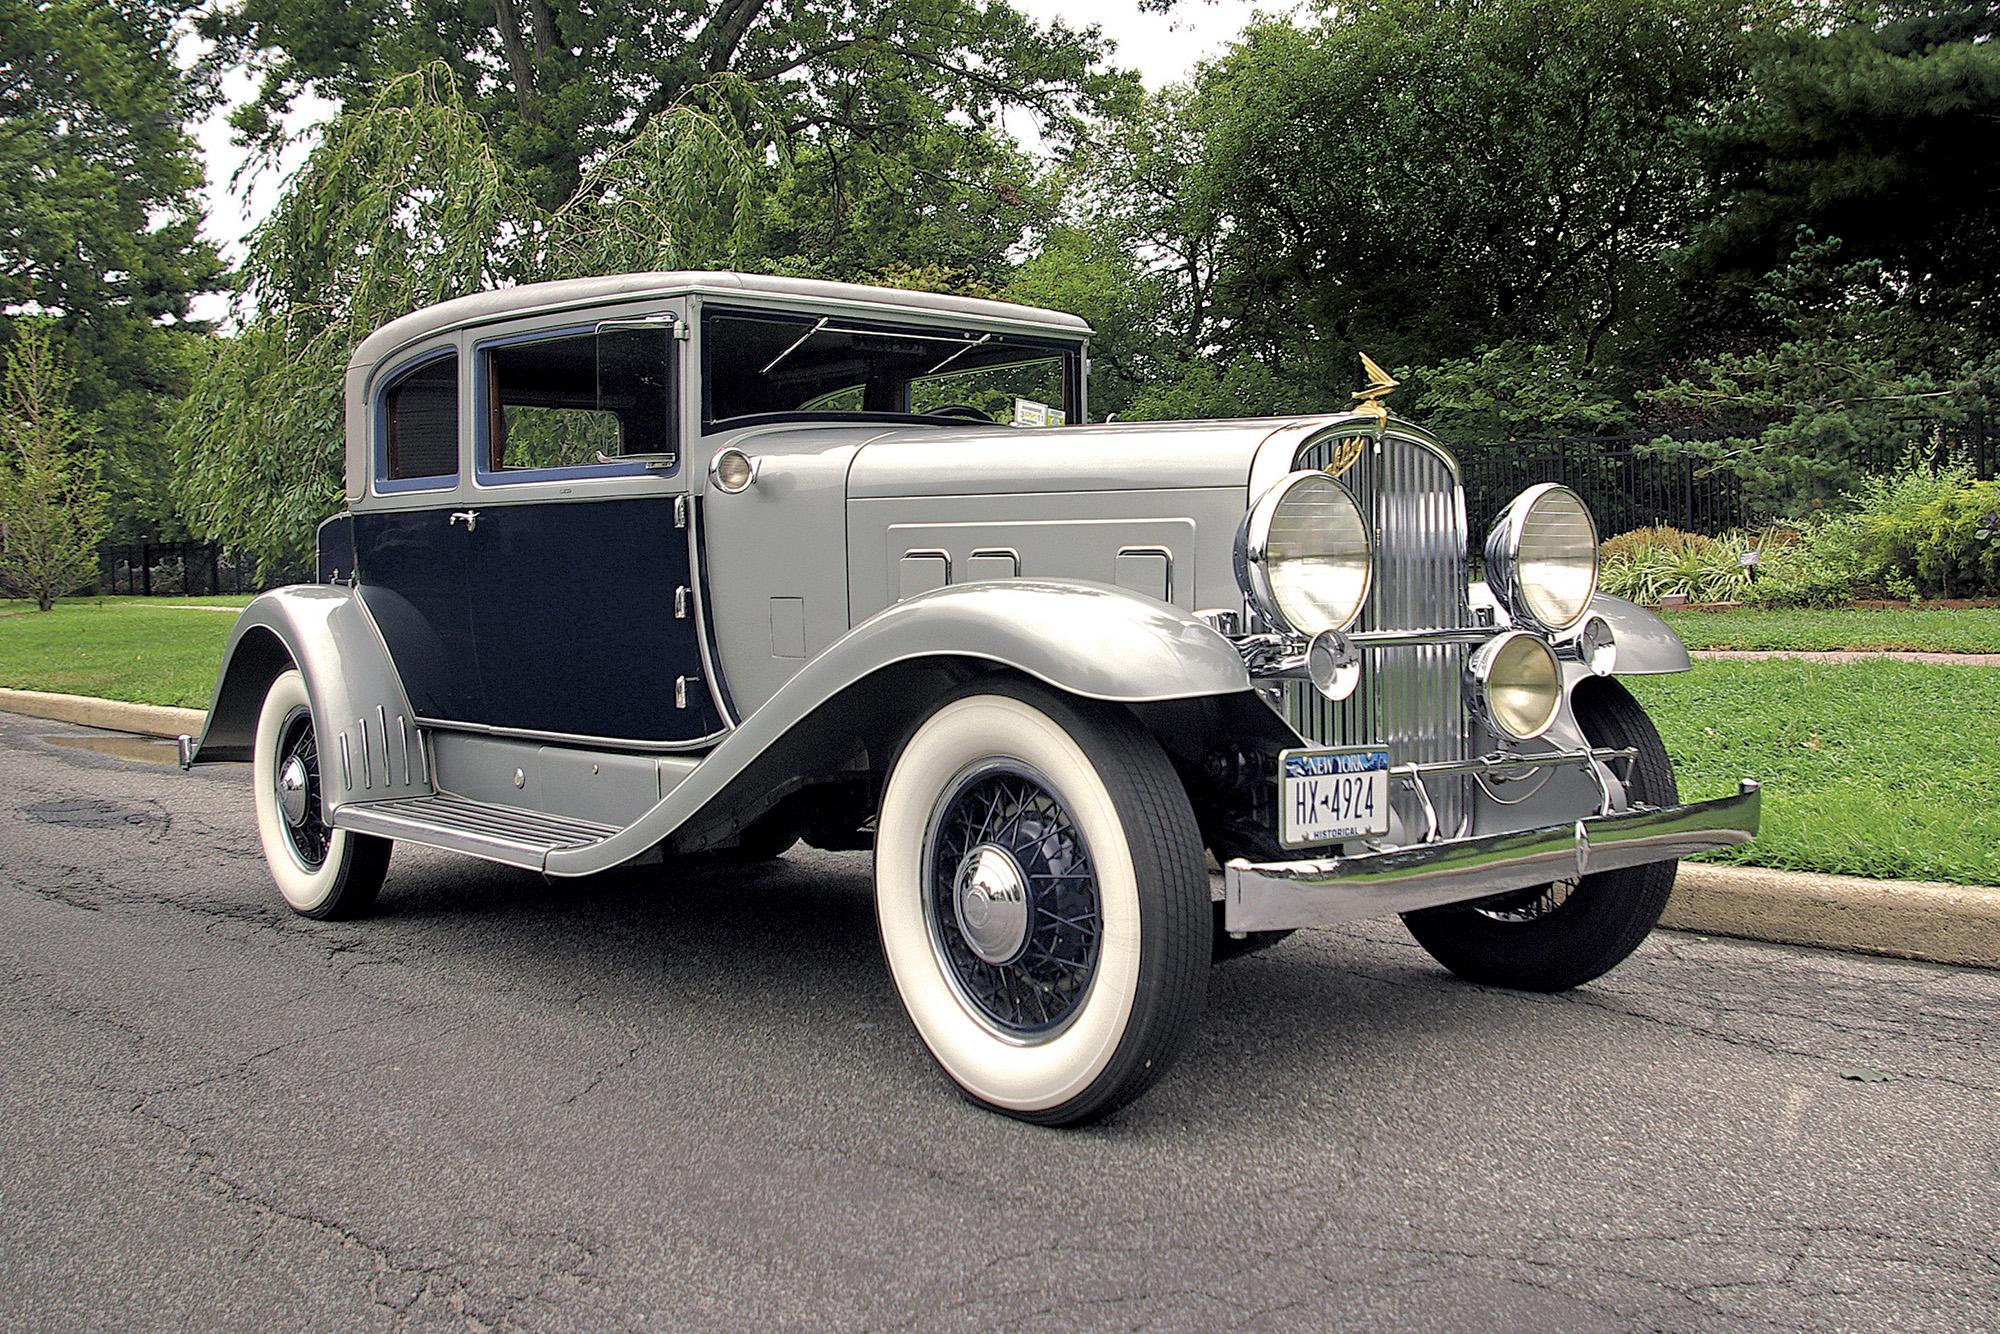 Air-cooled 1931 Franklin's unique past goes beyond its custom Derham body